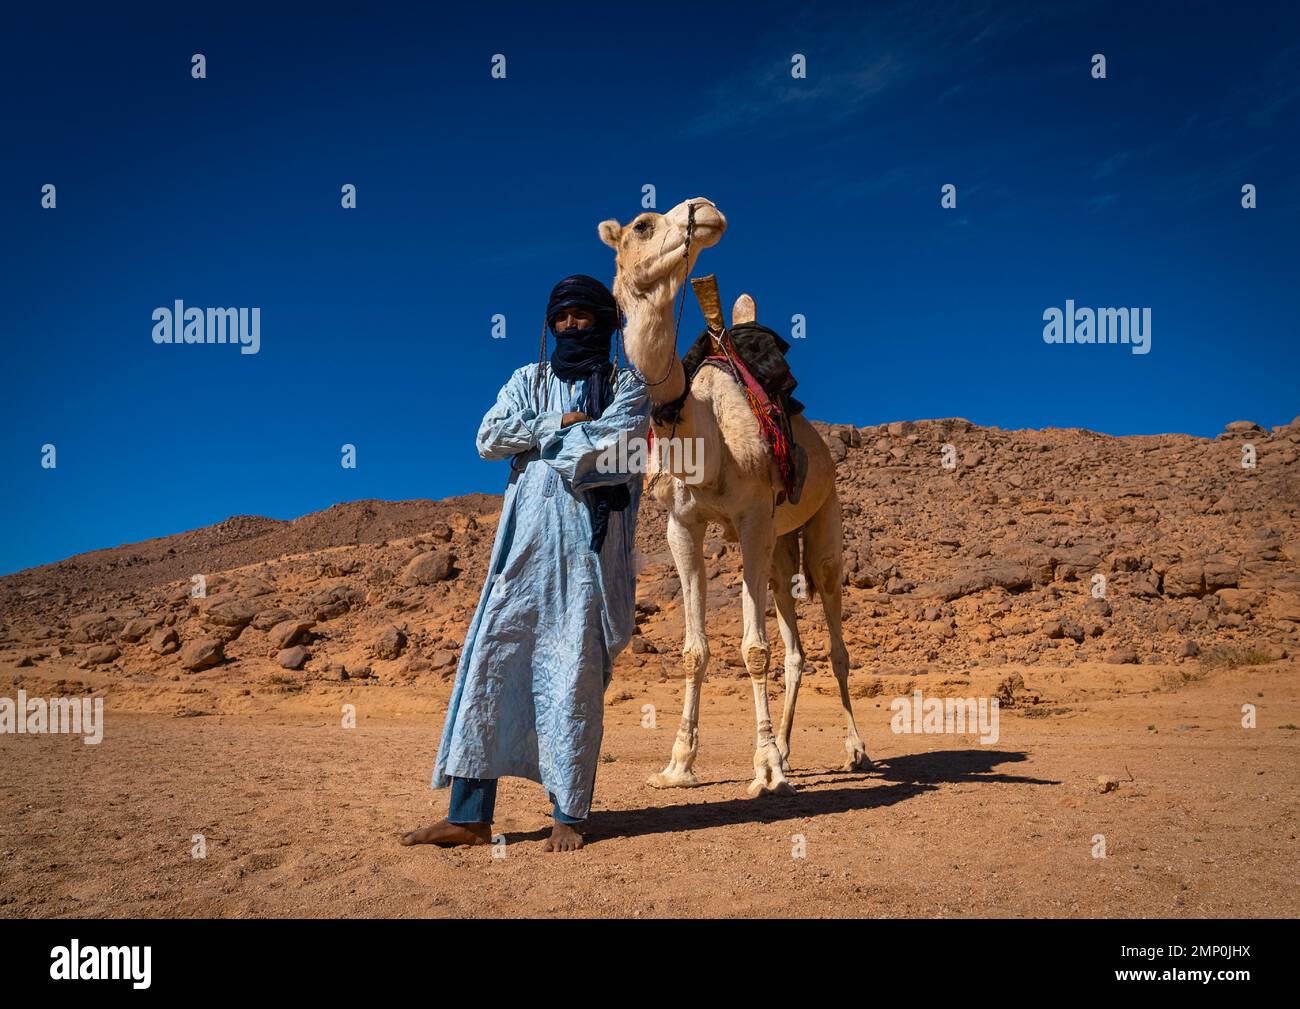 Tuareg man standing in front of his camel in the desert, North Africa, Tamanrasset, Algeria Stock Photo